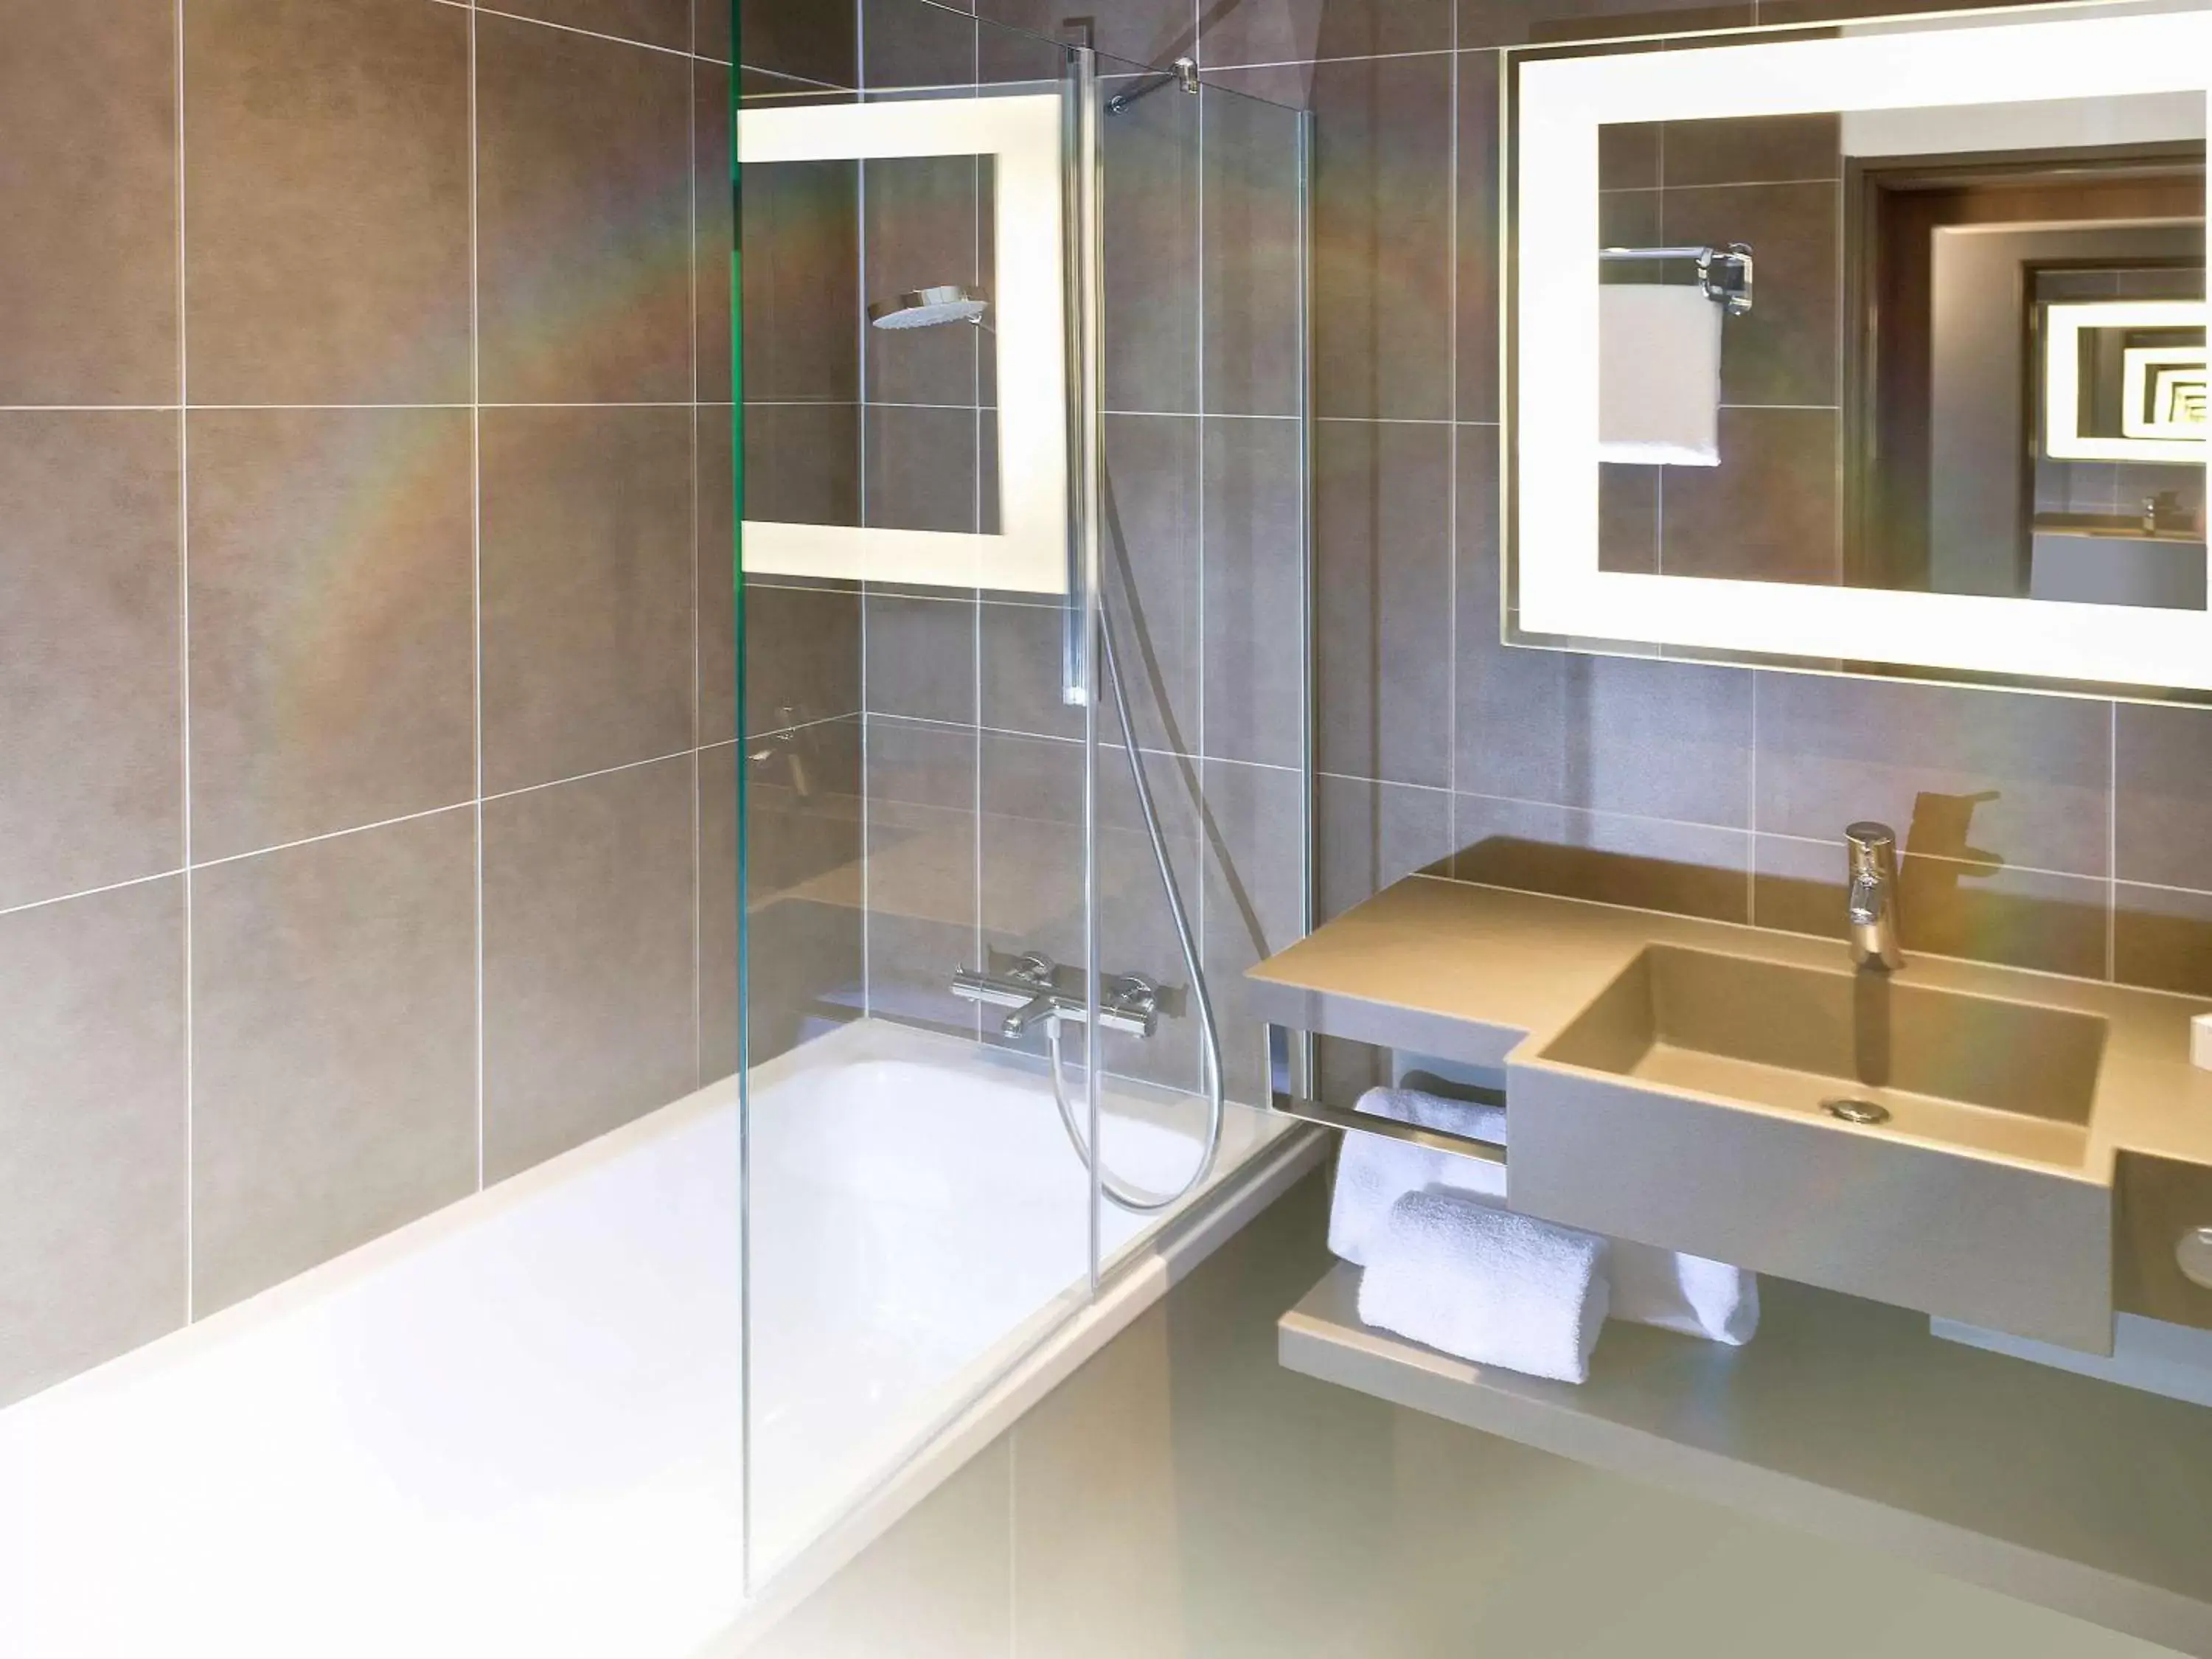 Photo of the whole room, Bathroom in Novotel Avignon Nord